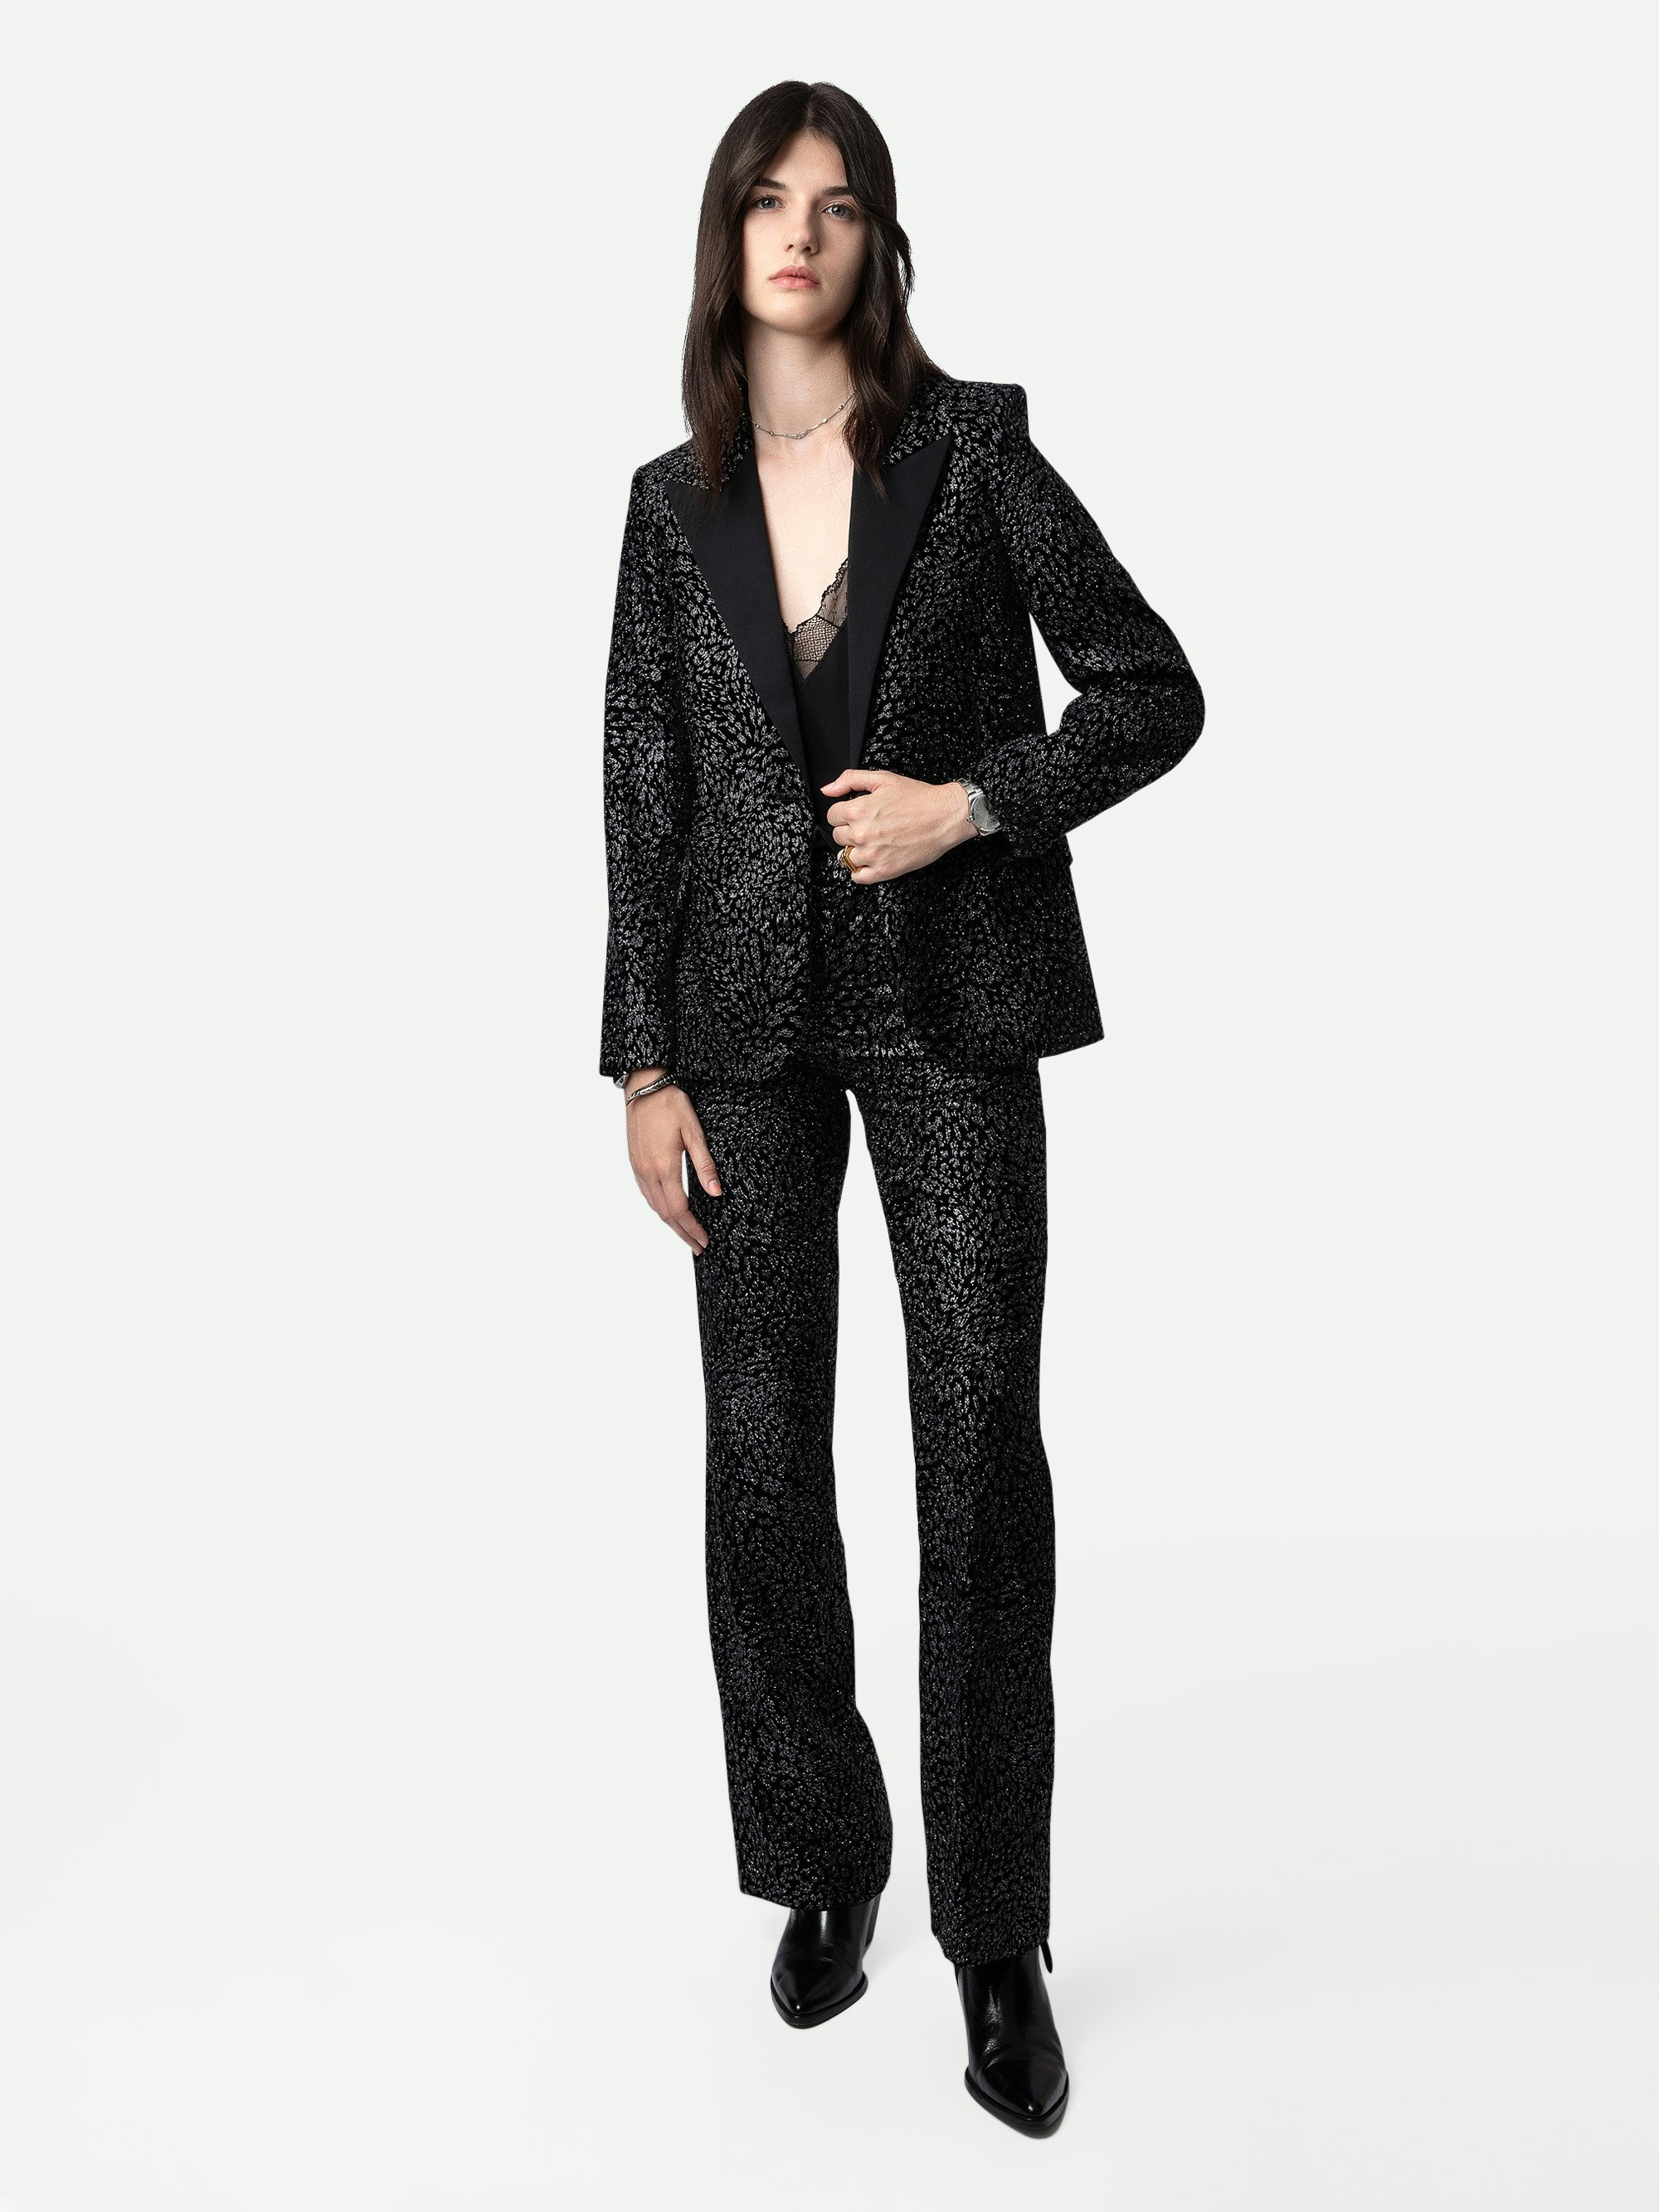 Venus Velvet Blazer - Women’s black glitter velvet tailored blazer with leopard motifs and button fastening.